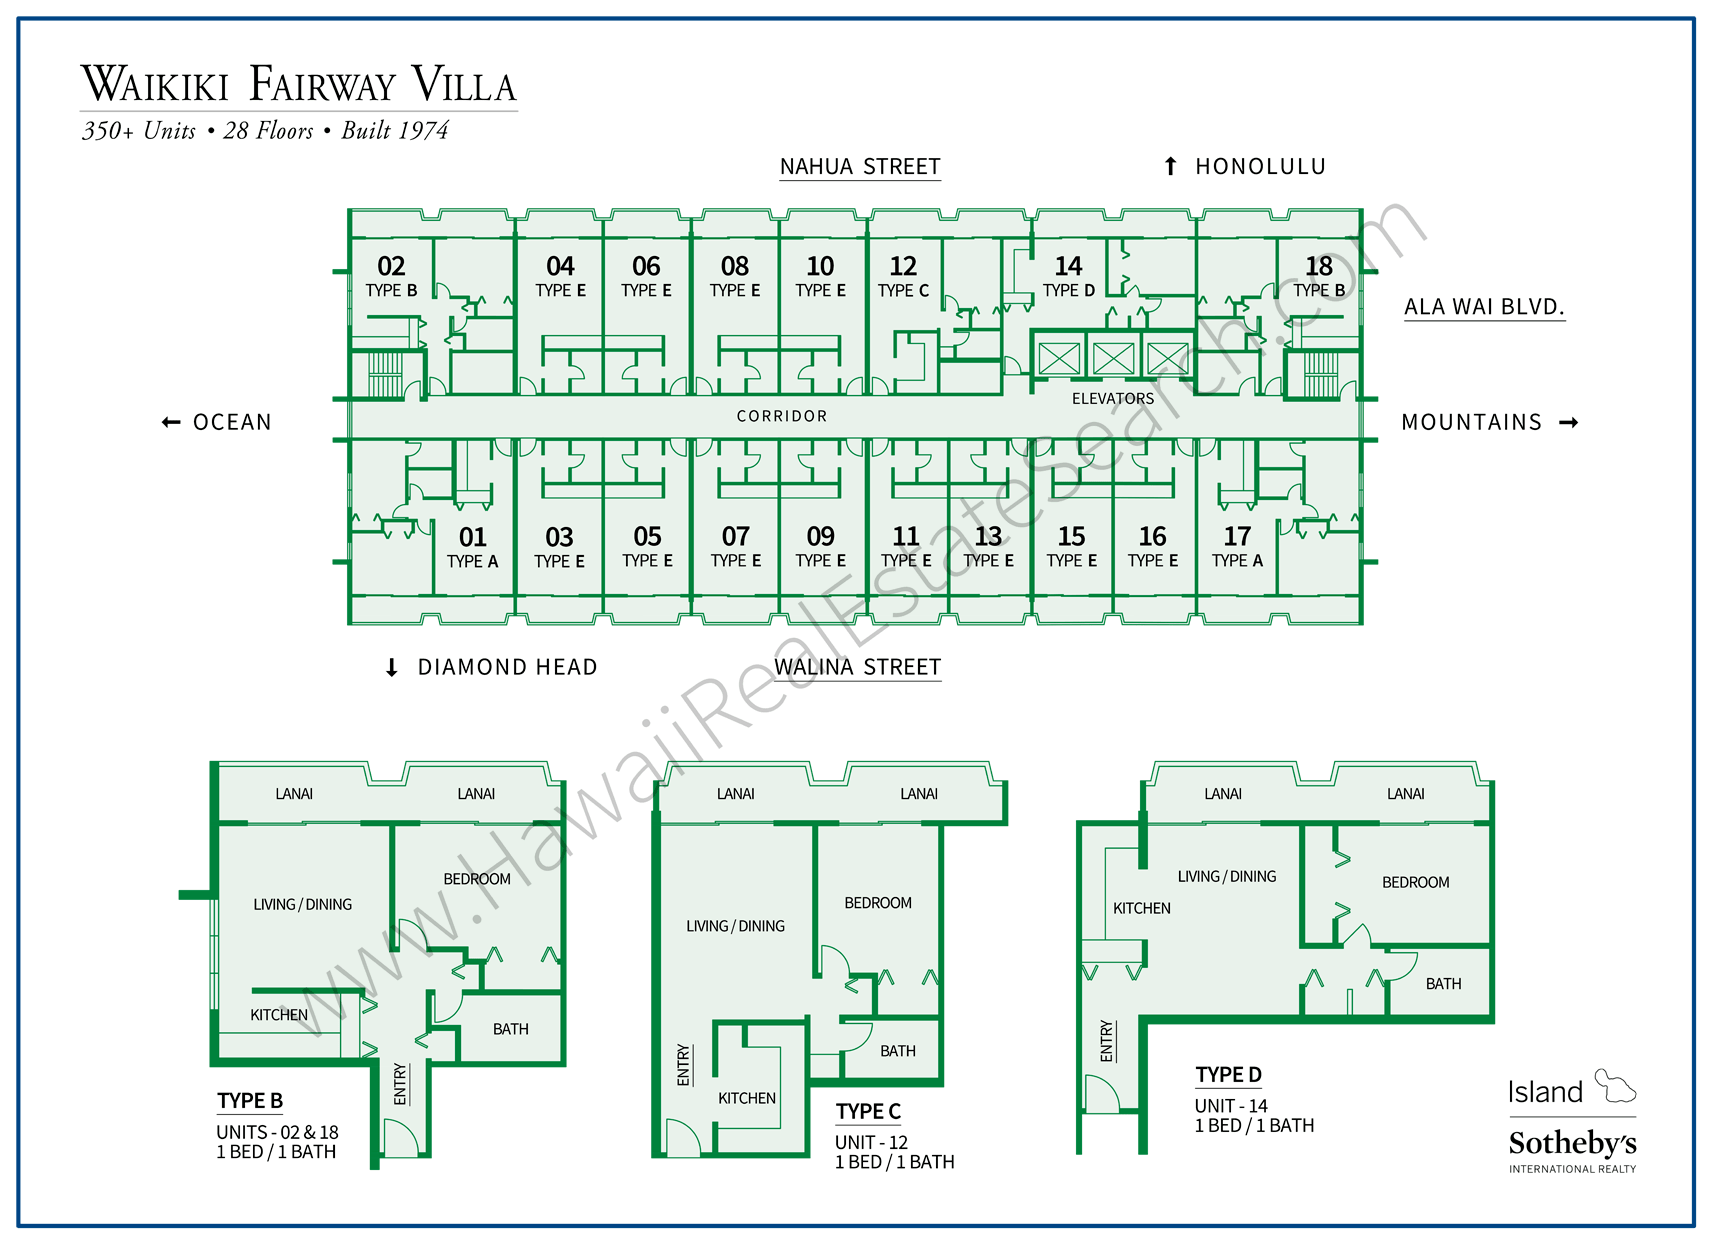 Waikiki Fairway Villa Map and Floor Plans